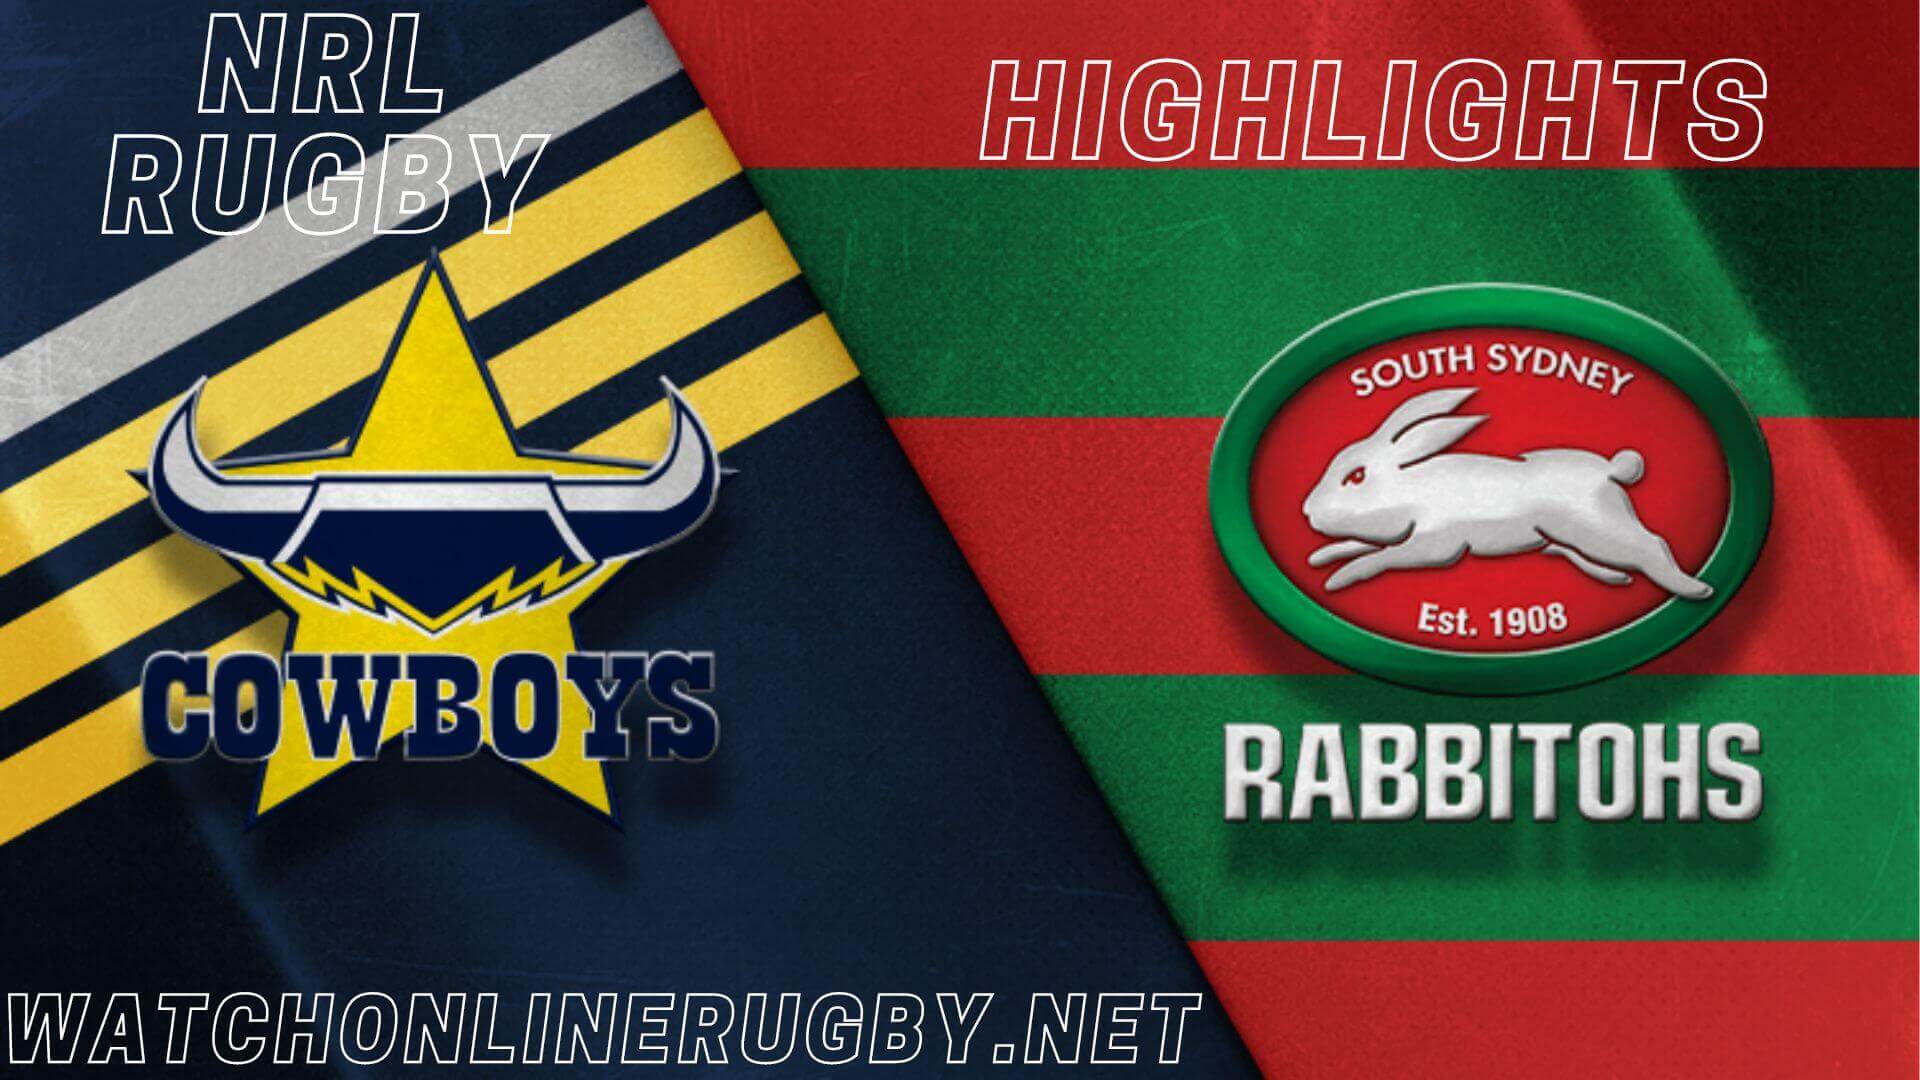 Rabbitohs Vs Cowboys Highlights RD 24 NRL Rugby